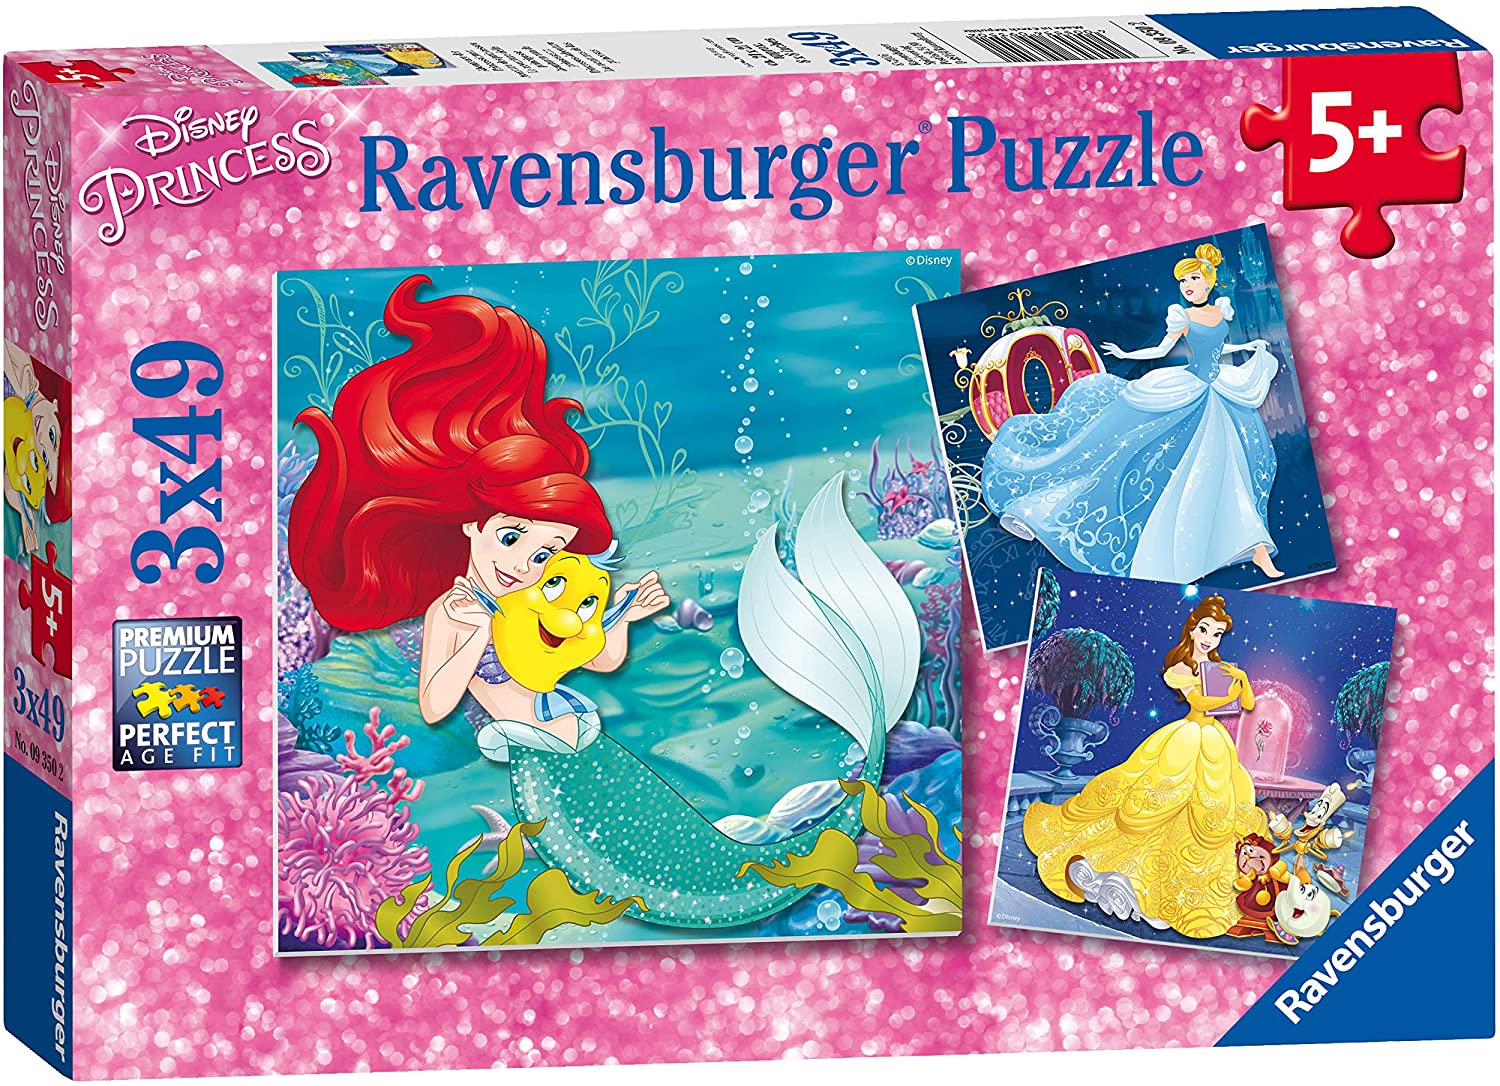 Princesses Adventure 3 x 49 pc Puzzle